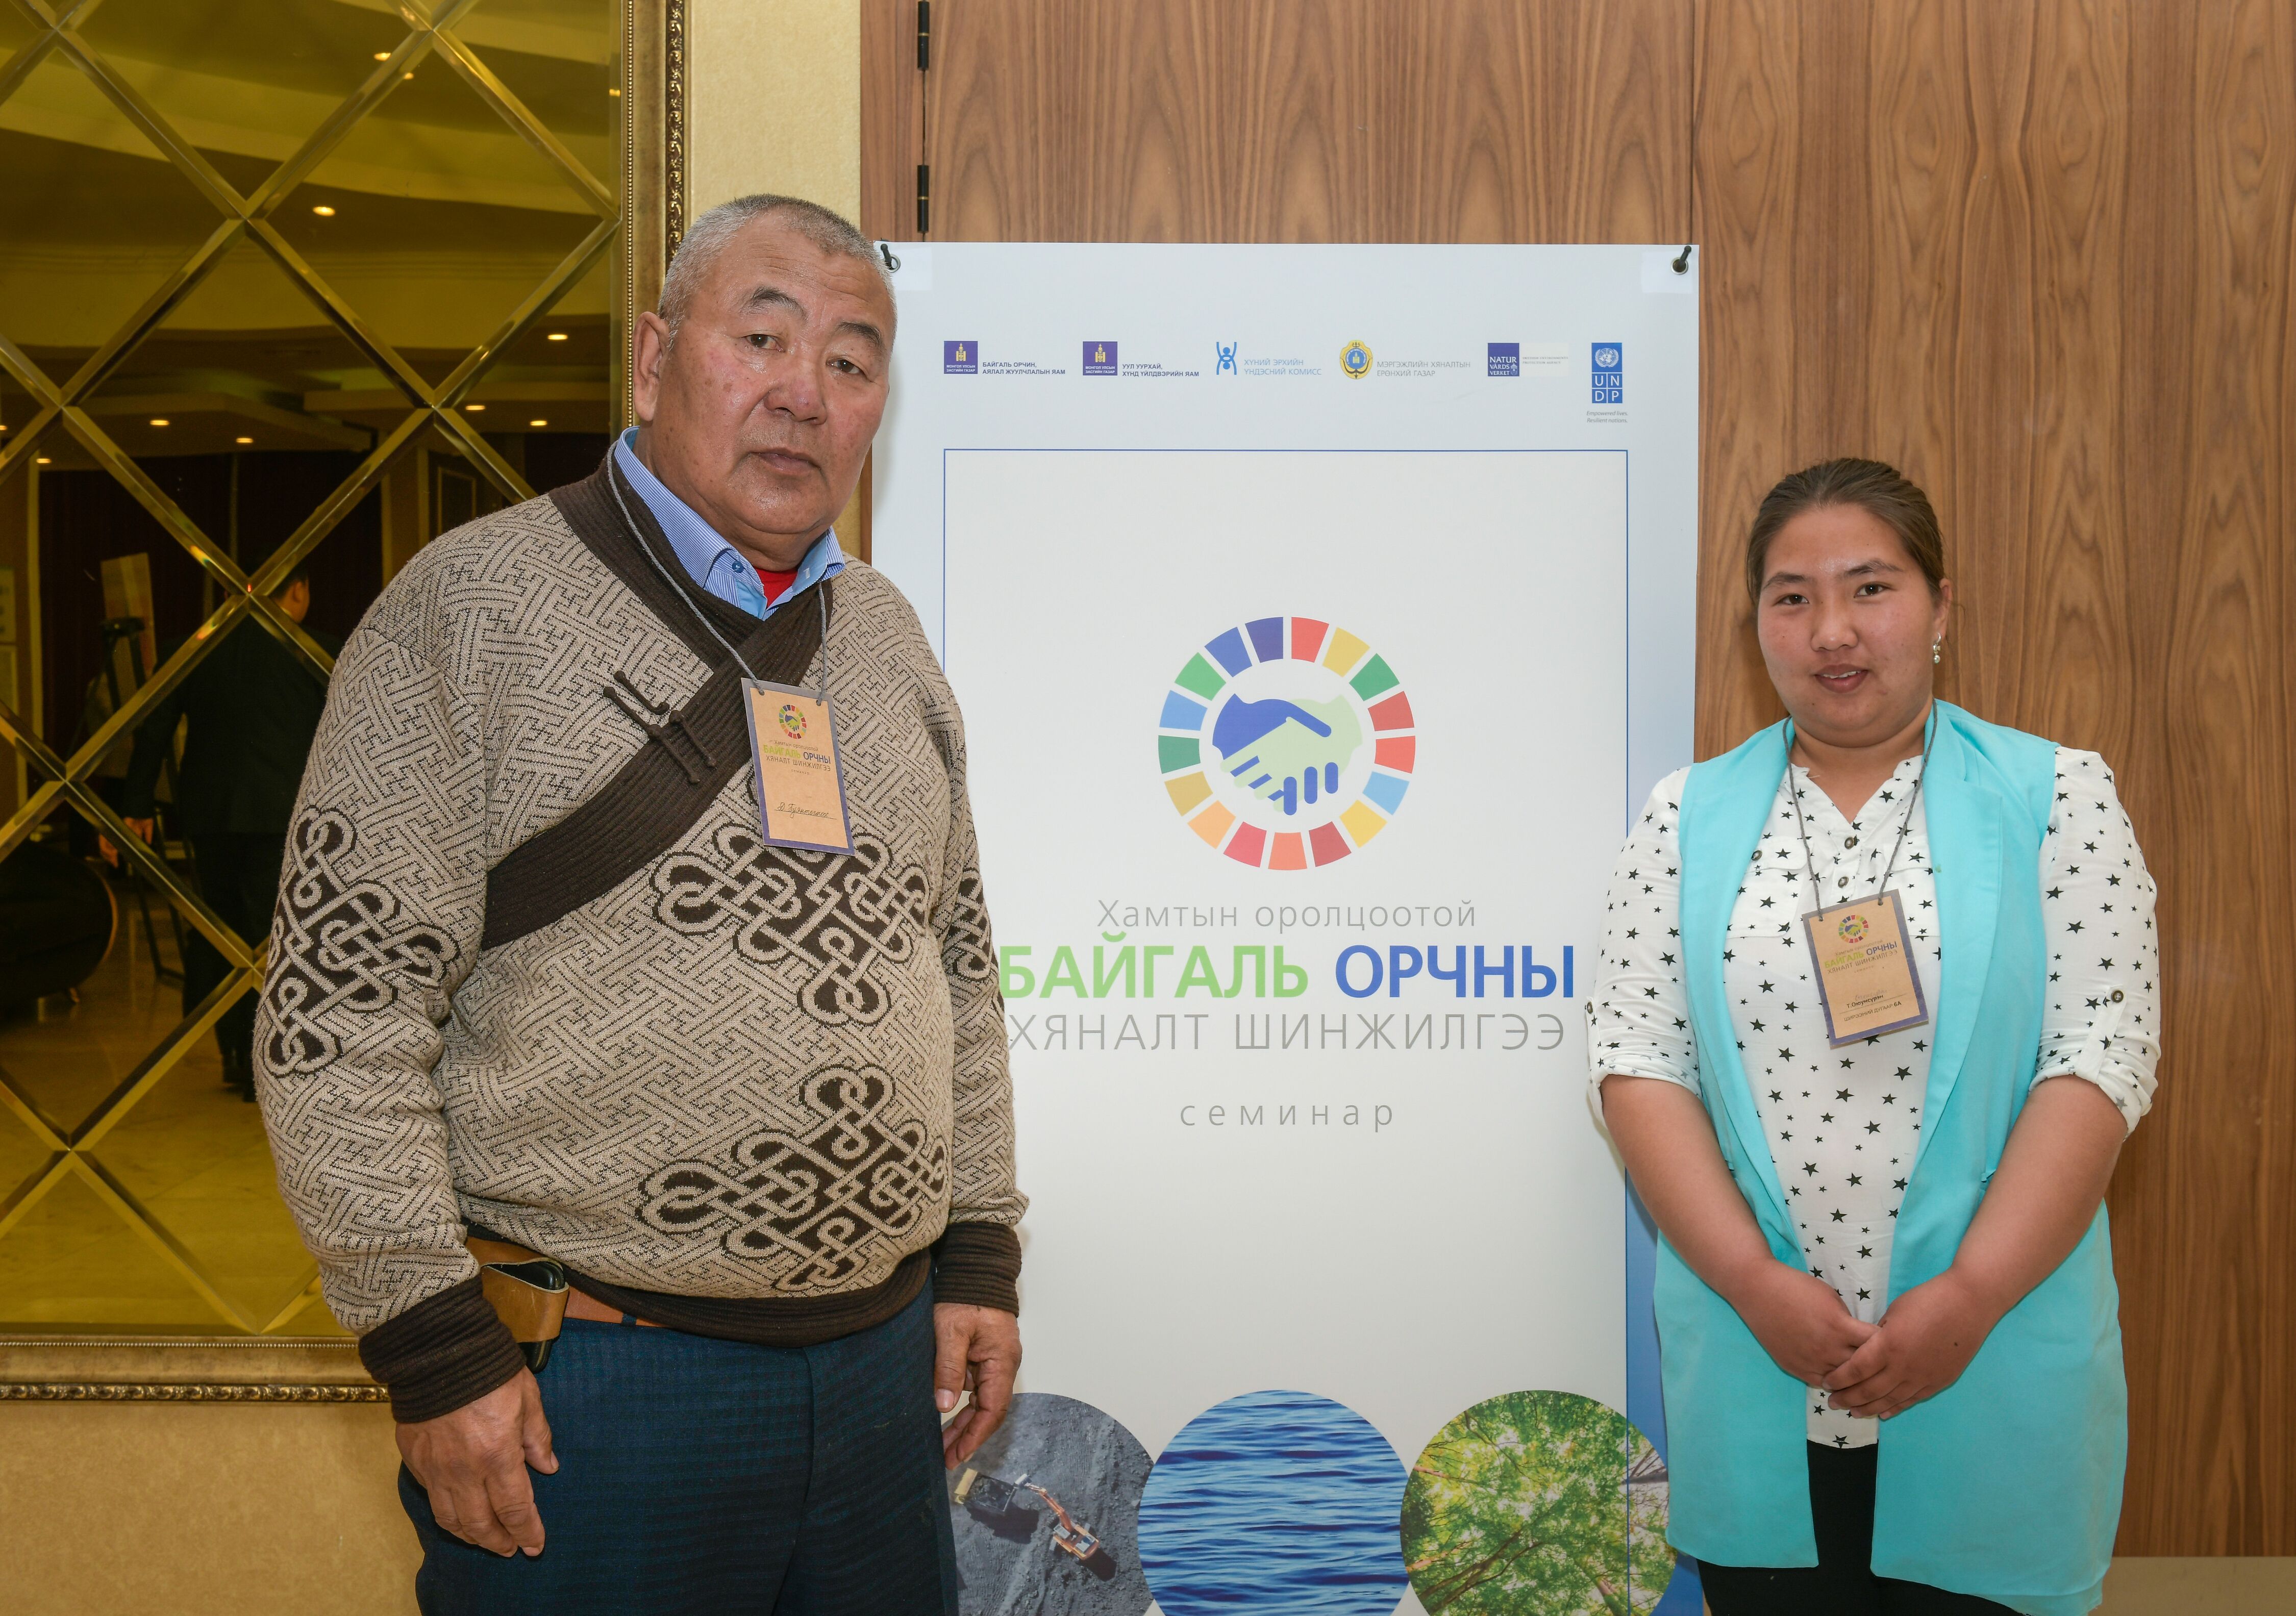 Participatory Environmental Monitoring in Mongolia